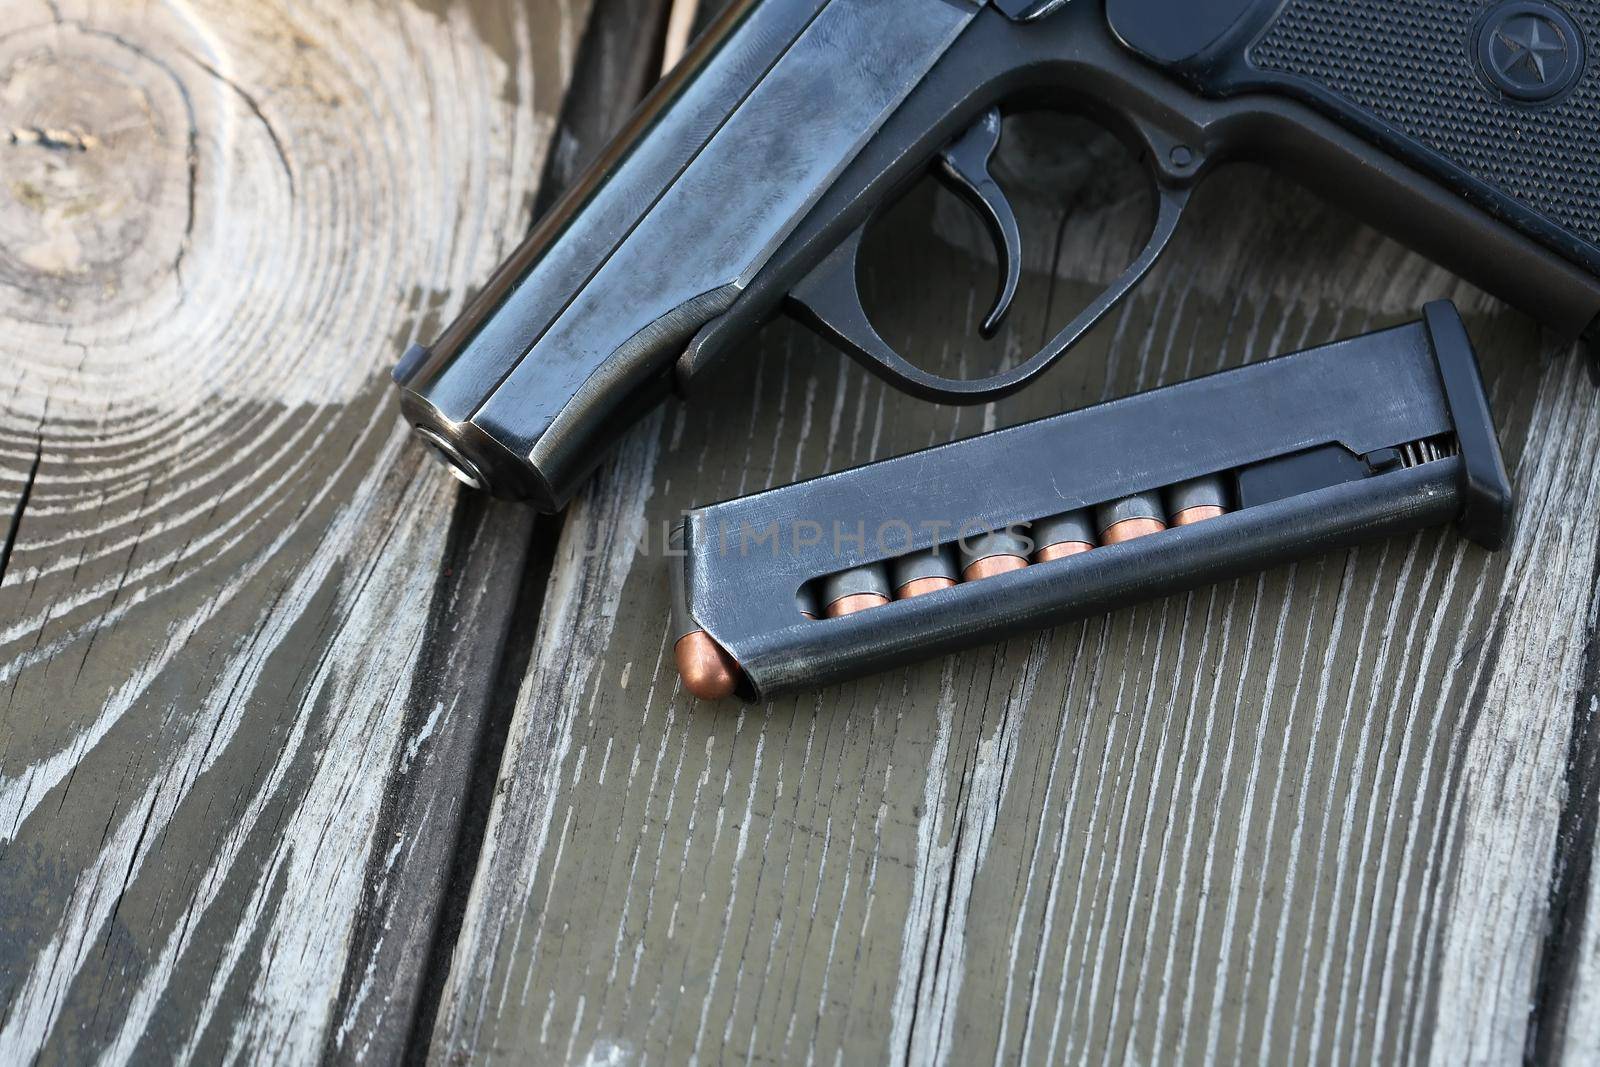 Handgun cartridges closeup on old wooden background near pistol